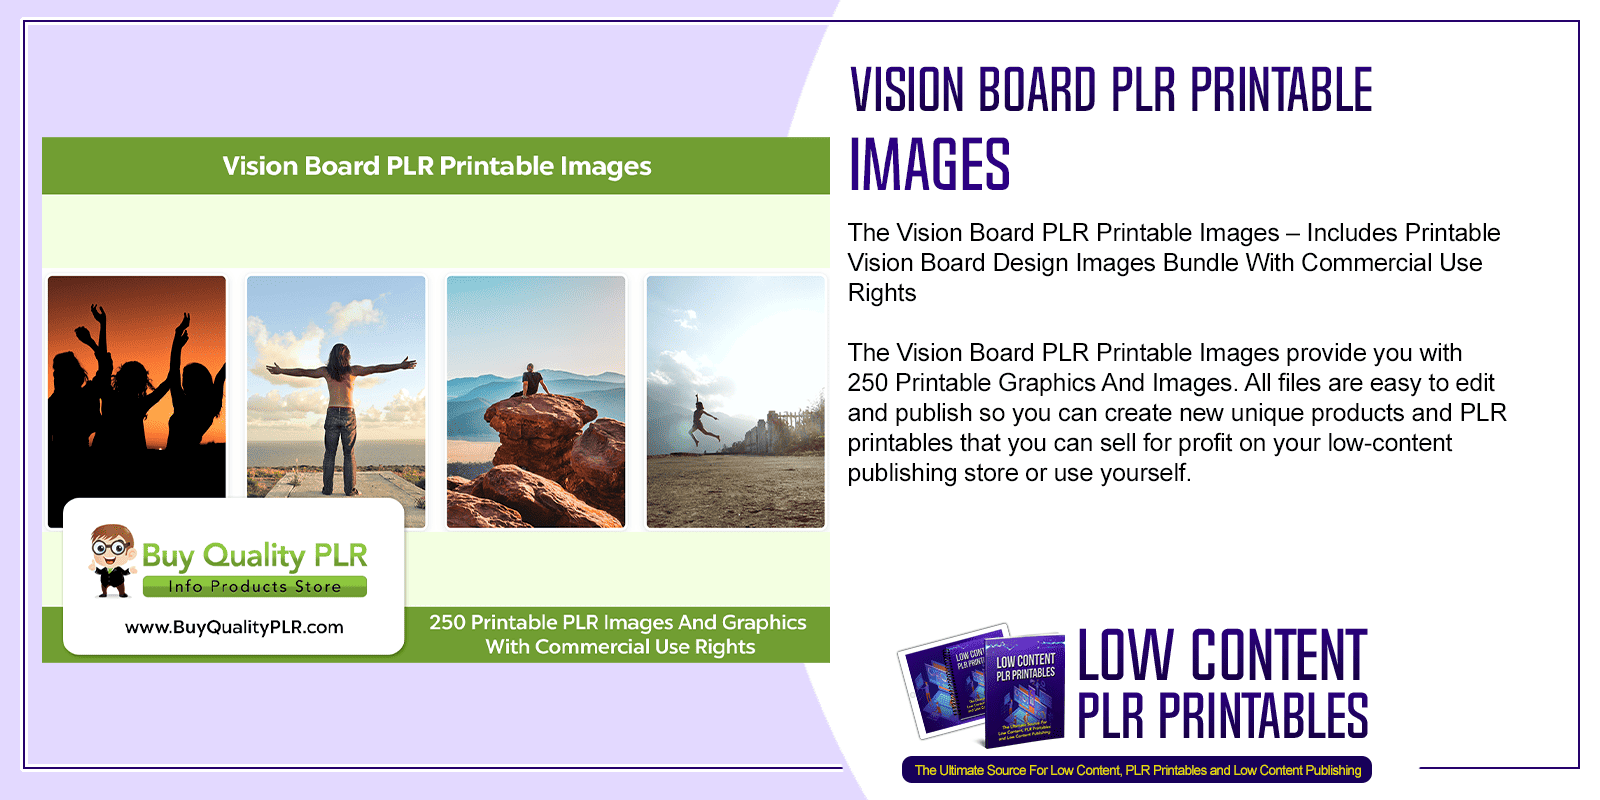 Vision Board PLR Printable Images